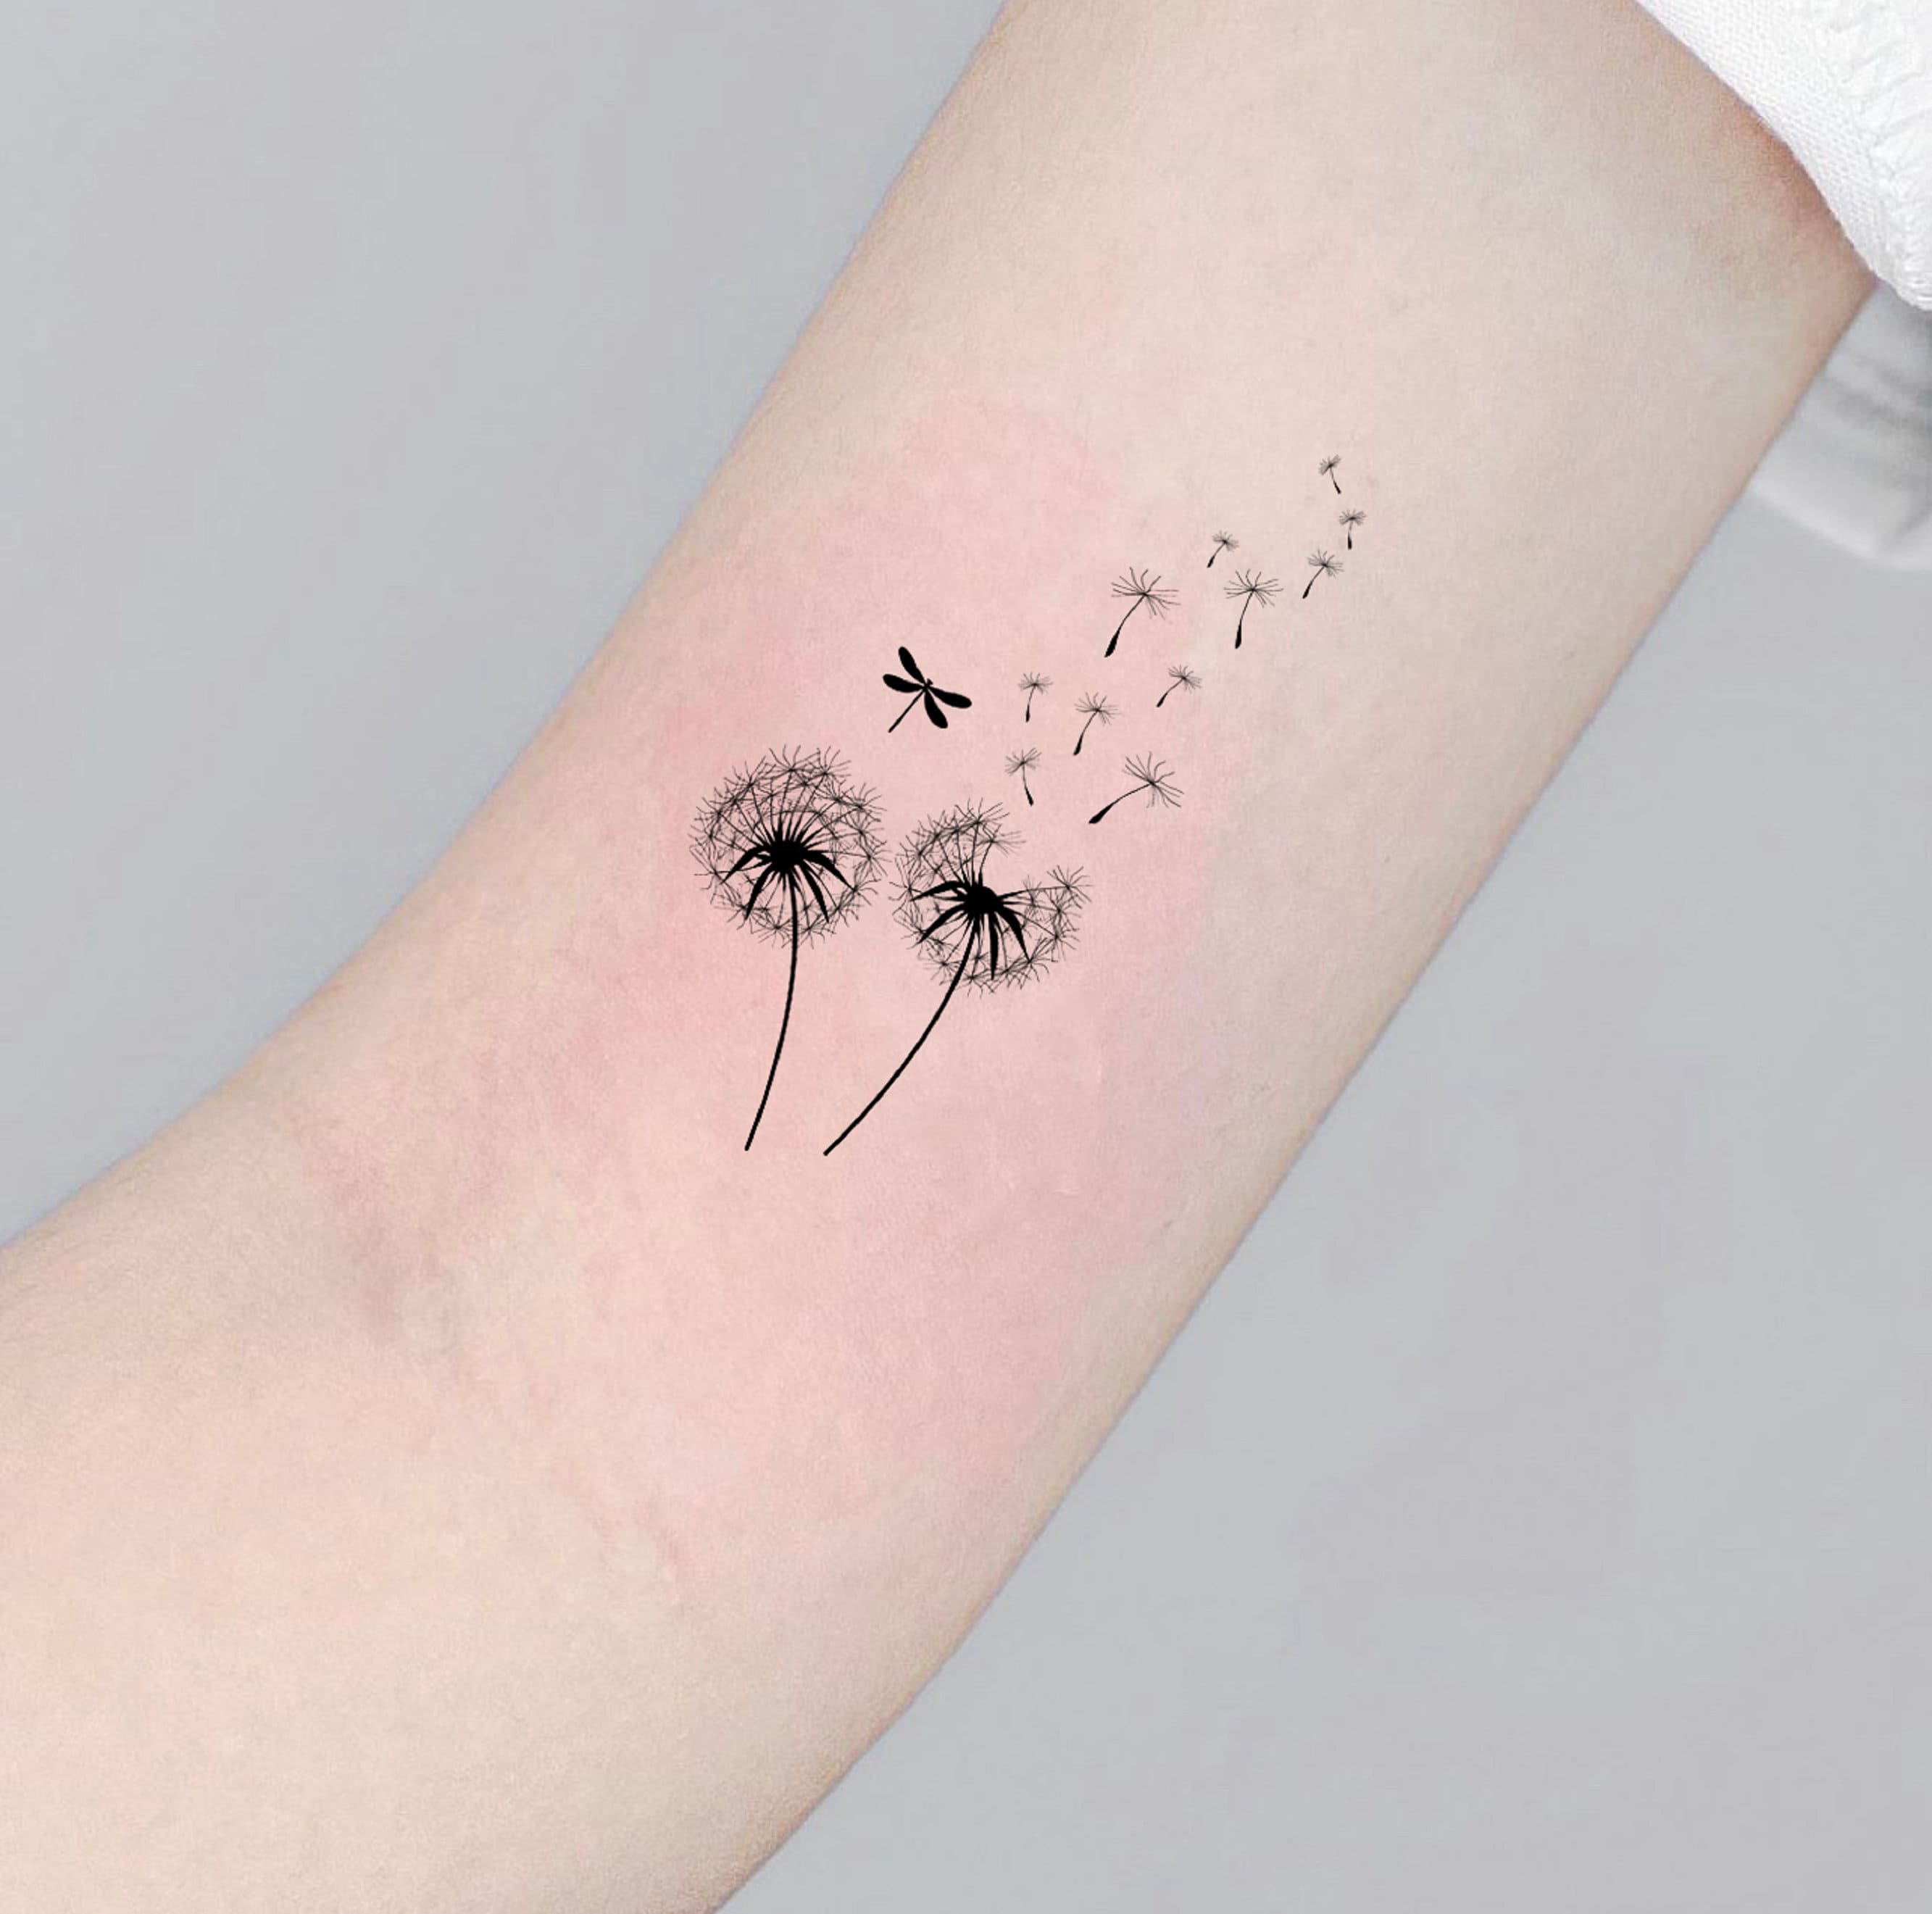 Dandelion Tattoo Behind Ear - Best Tattoo Ideas Gallery